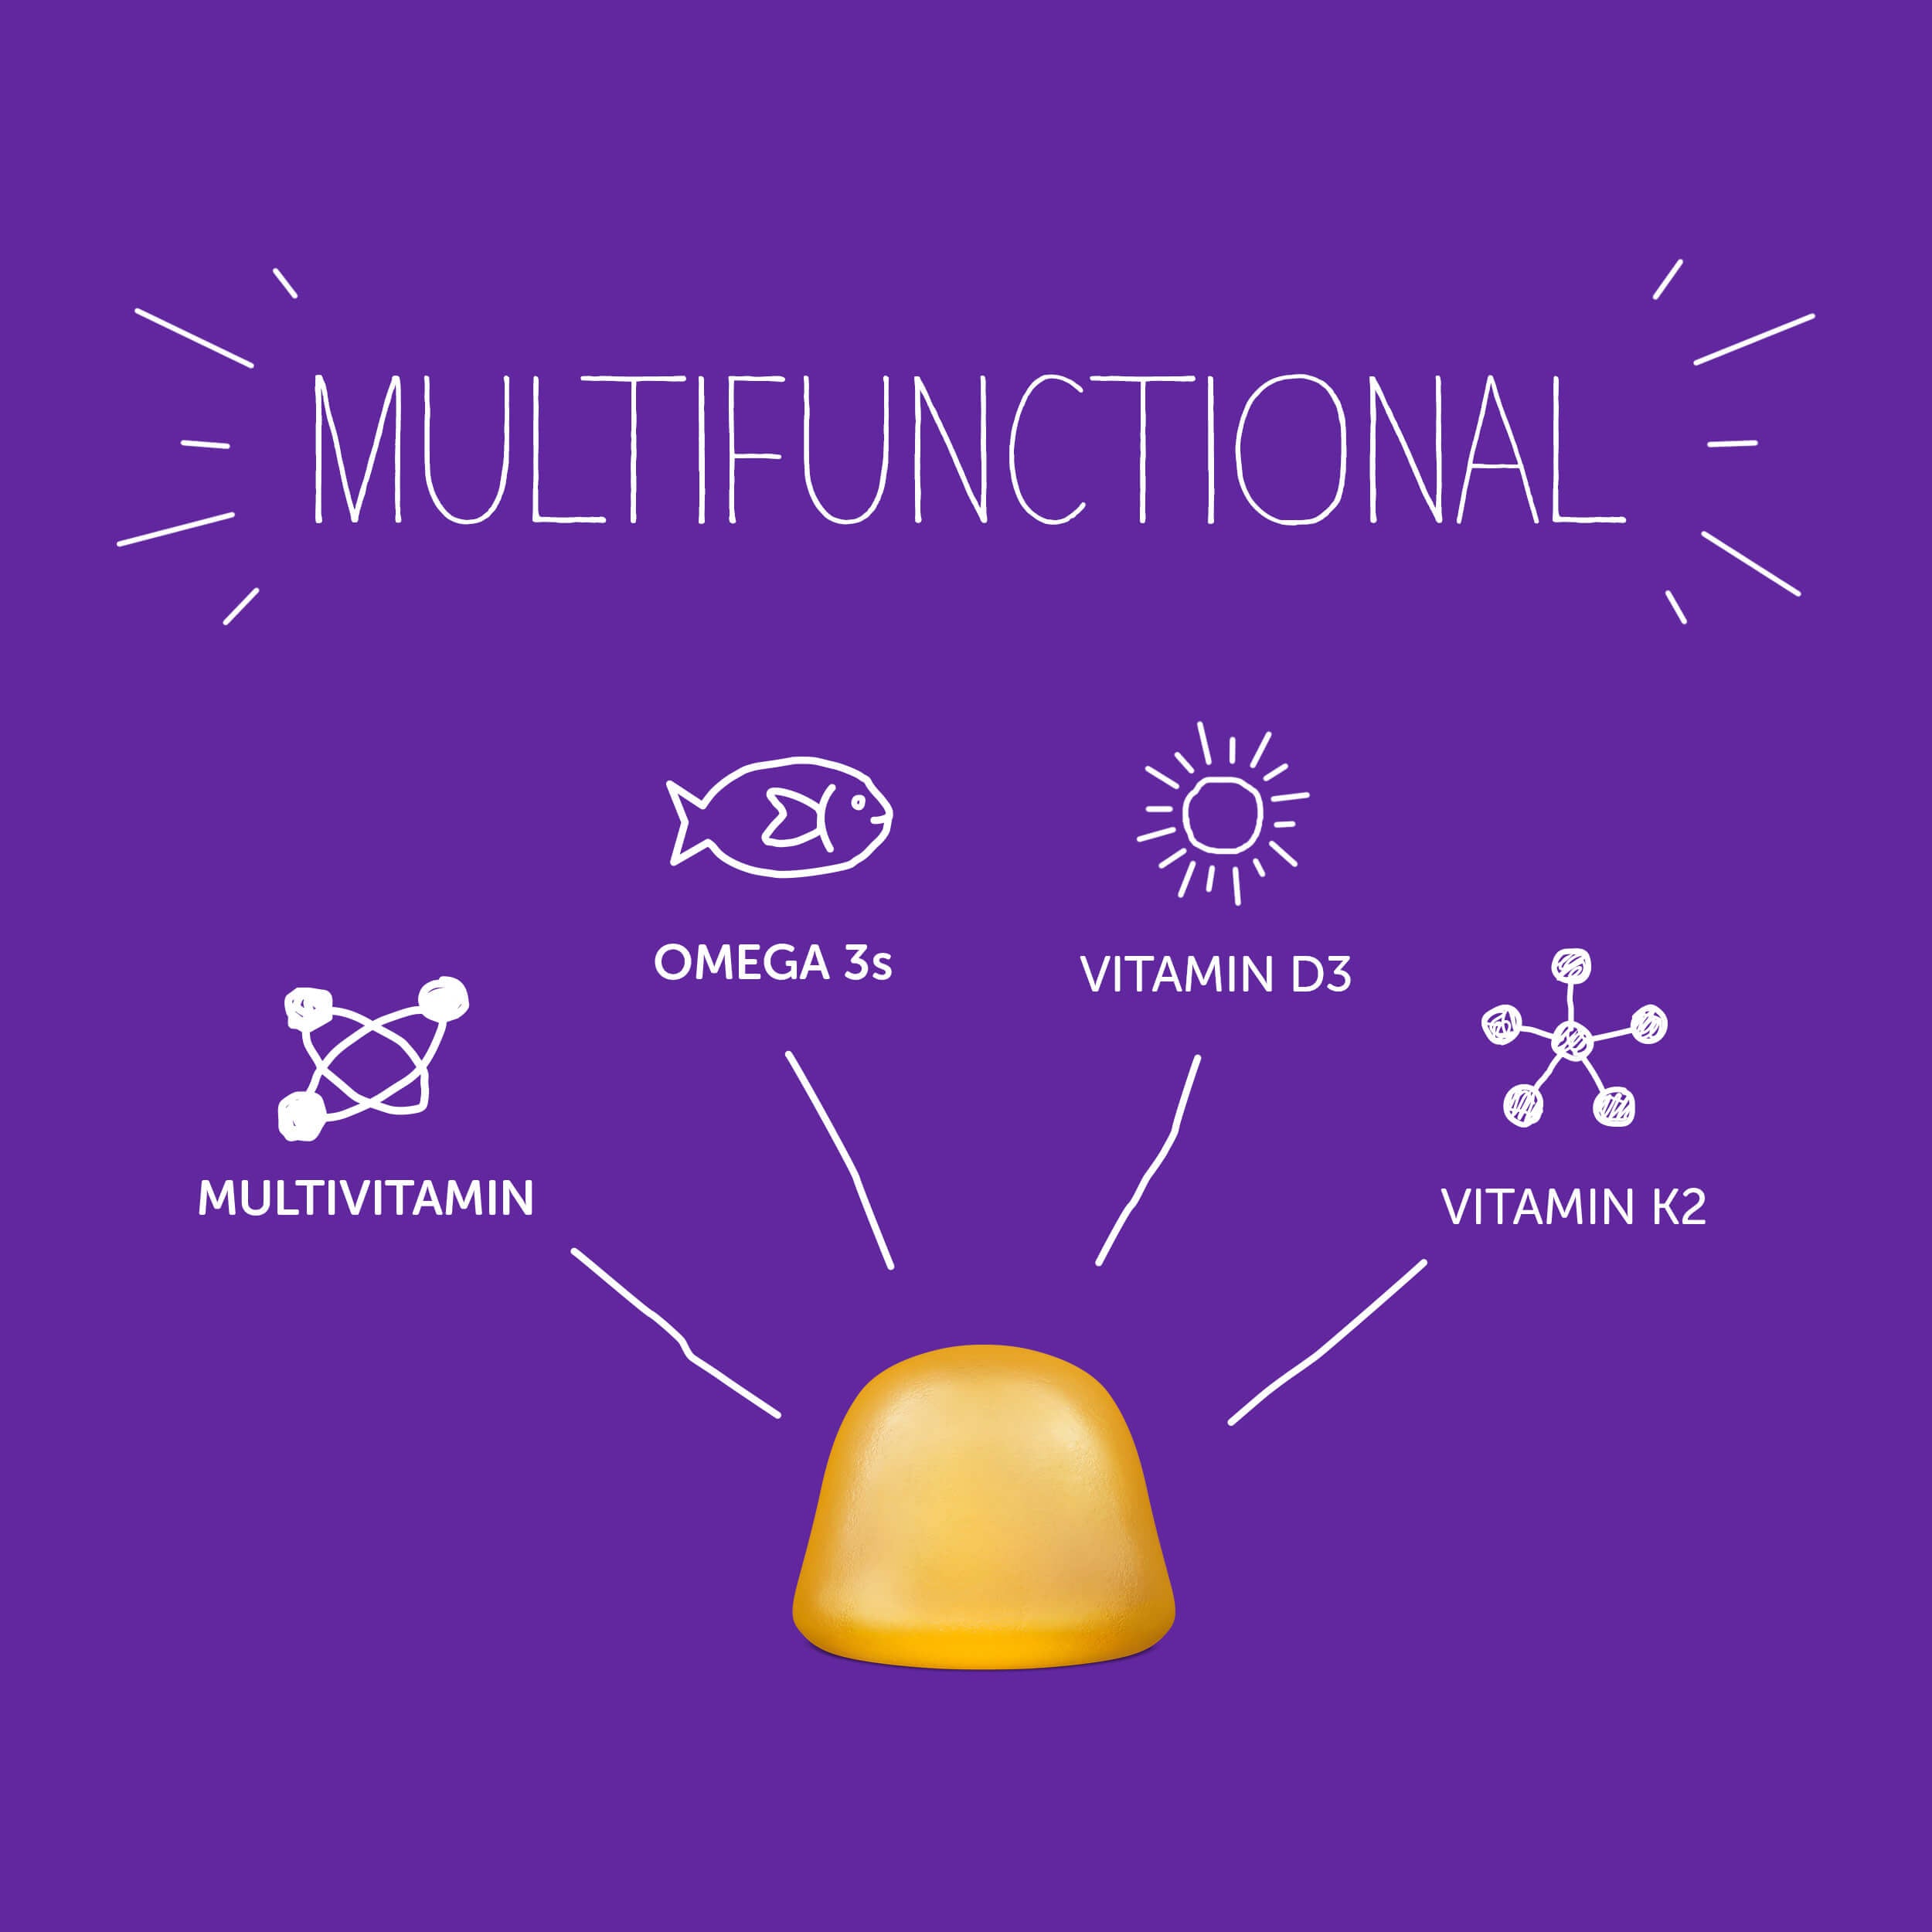 Multifunctional - Multivitamin, Omega 3s, Vitamin D3, Vitamin K2